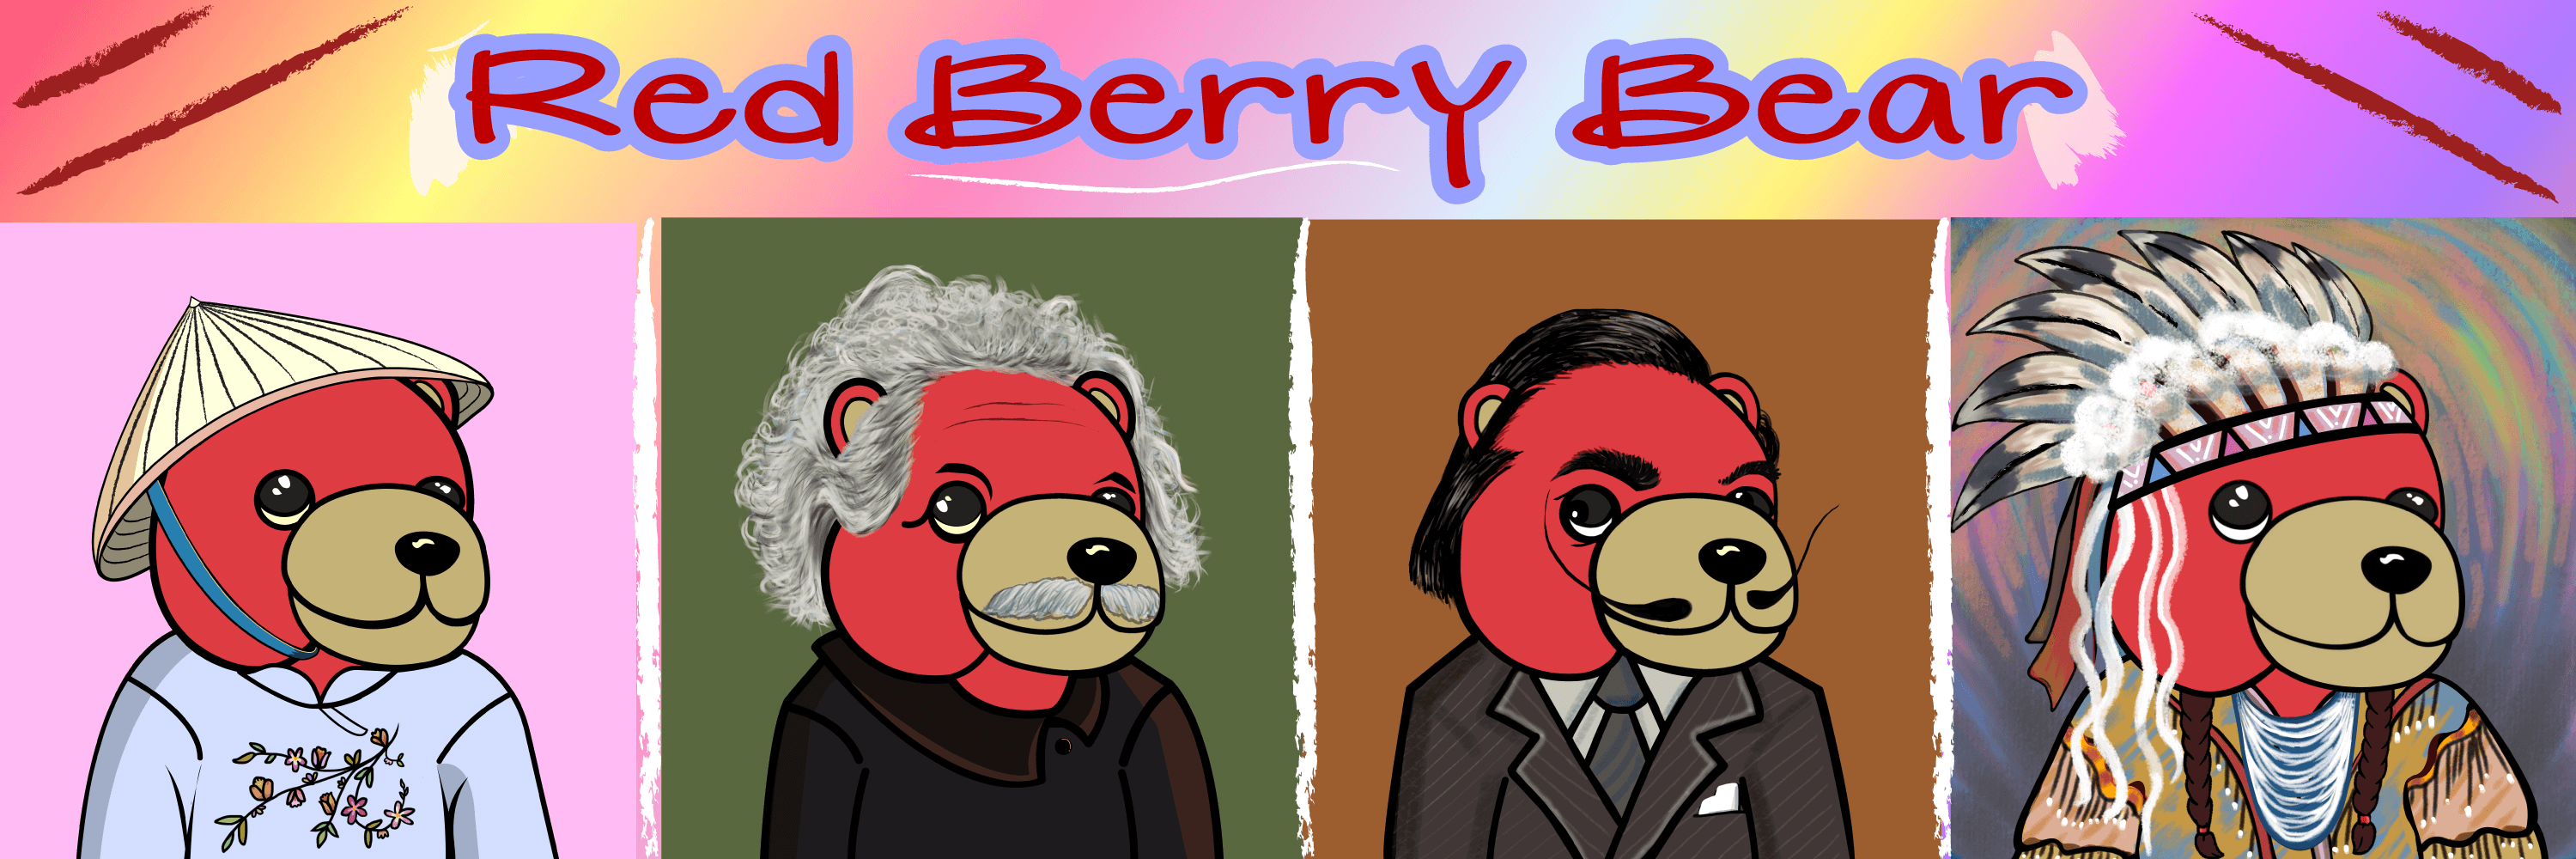 Red_Berry_Bear 横幅